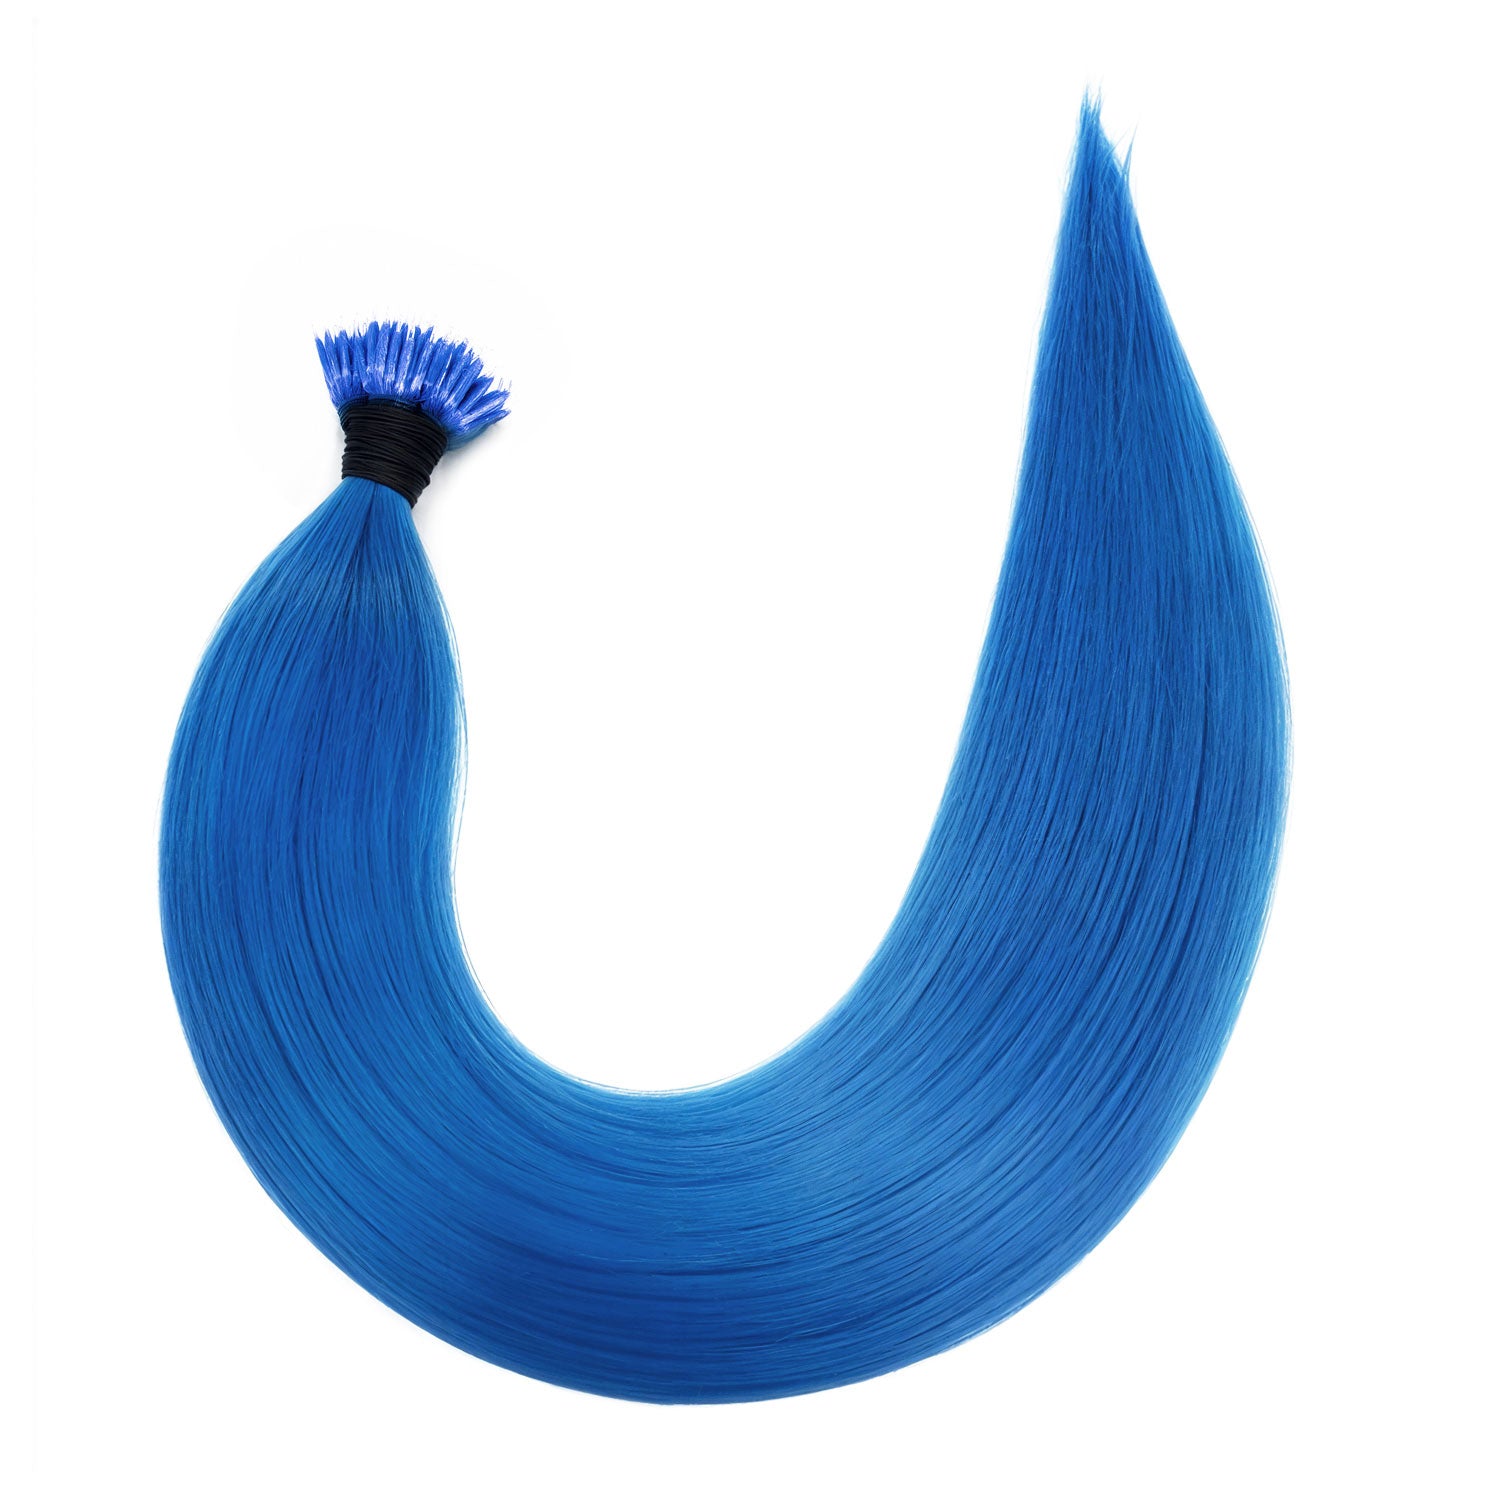 Blue Hair Extensions Human Hair Real Natural Hair